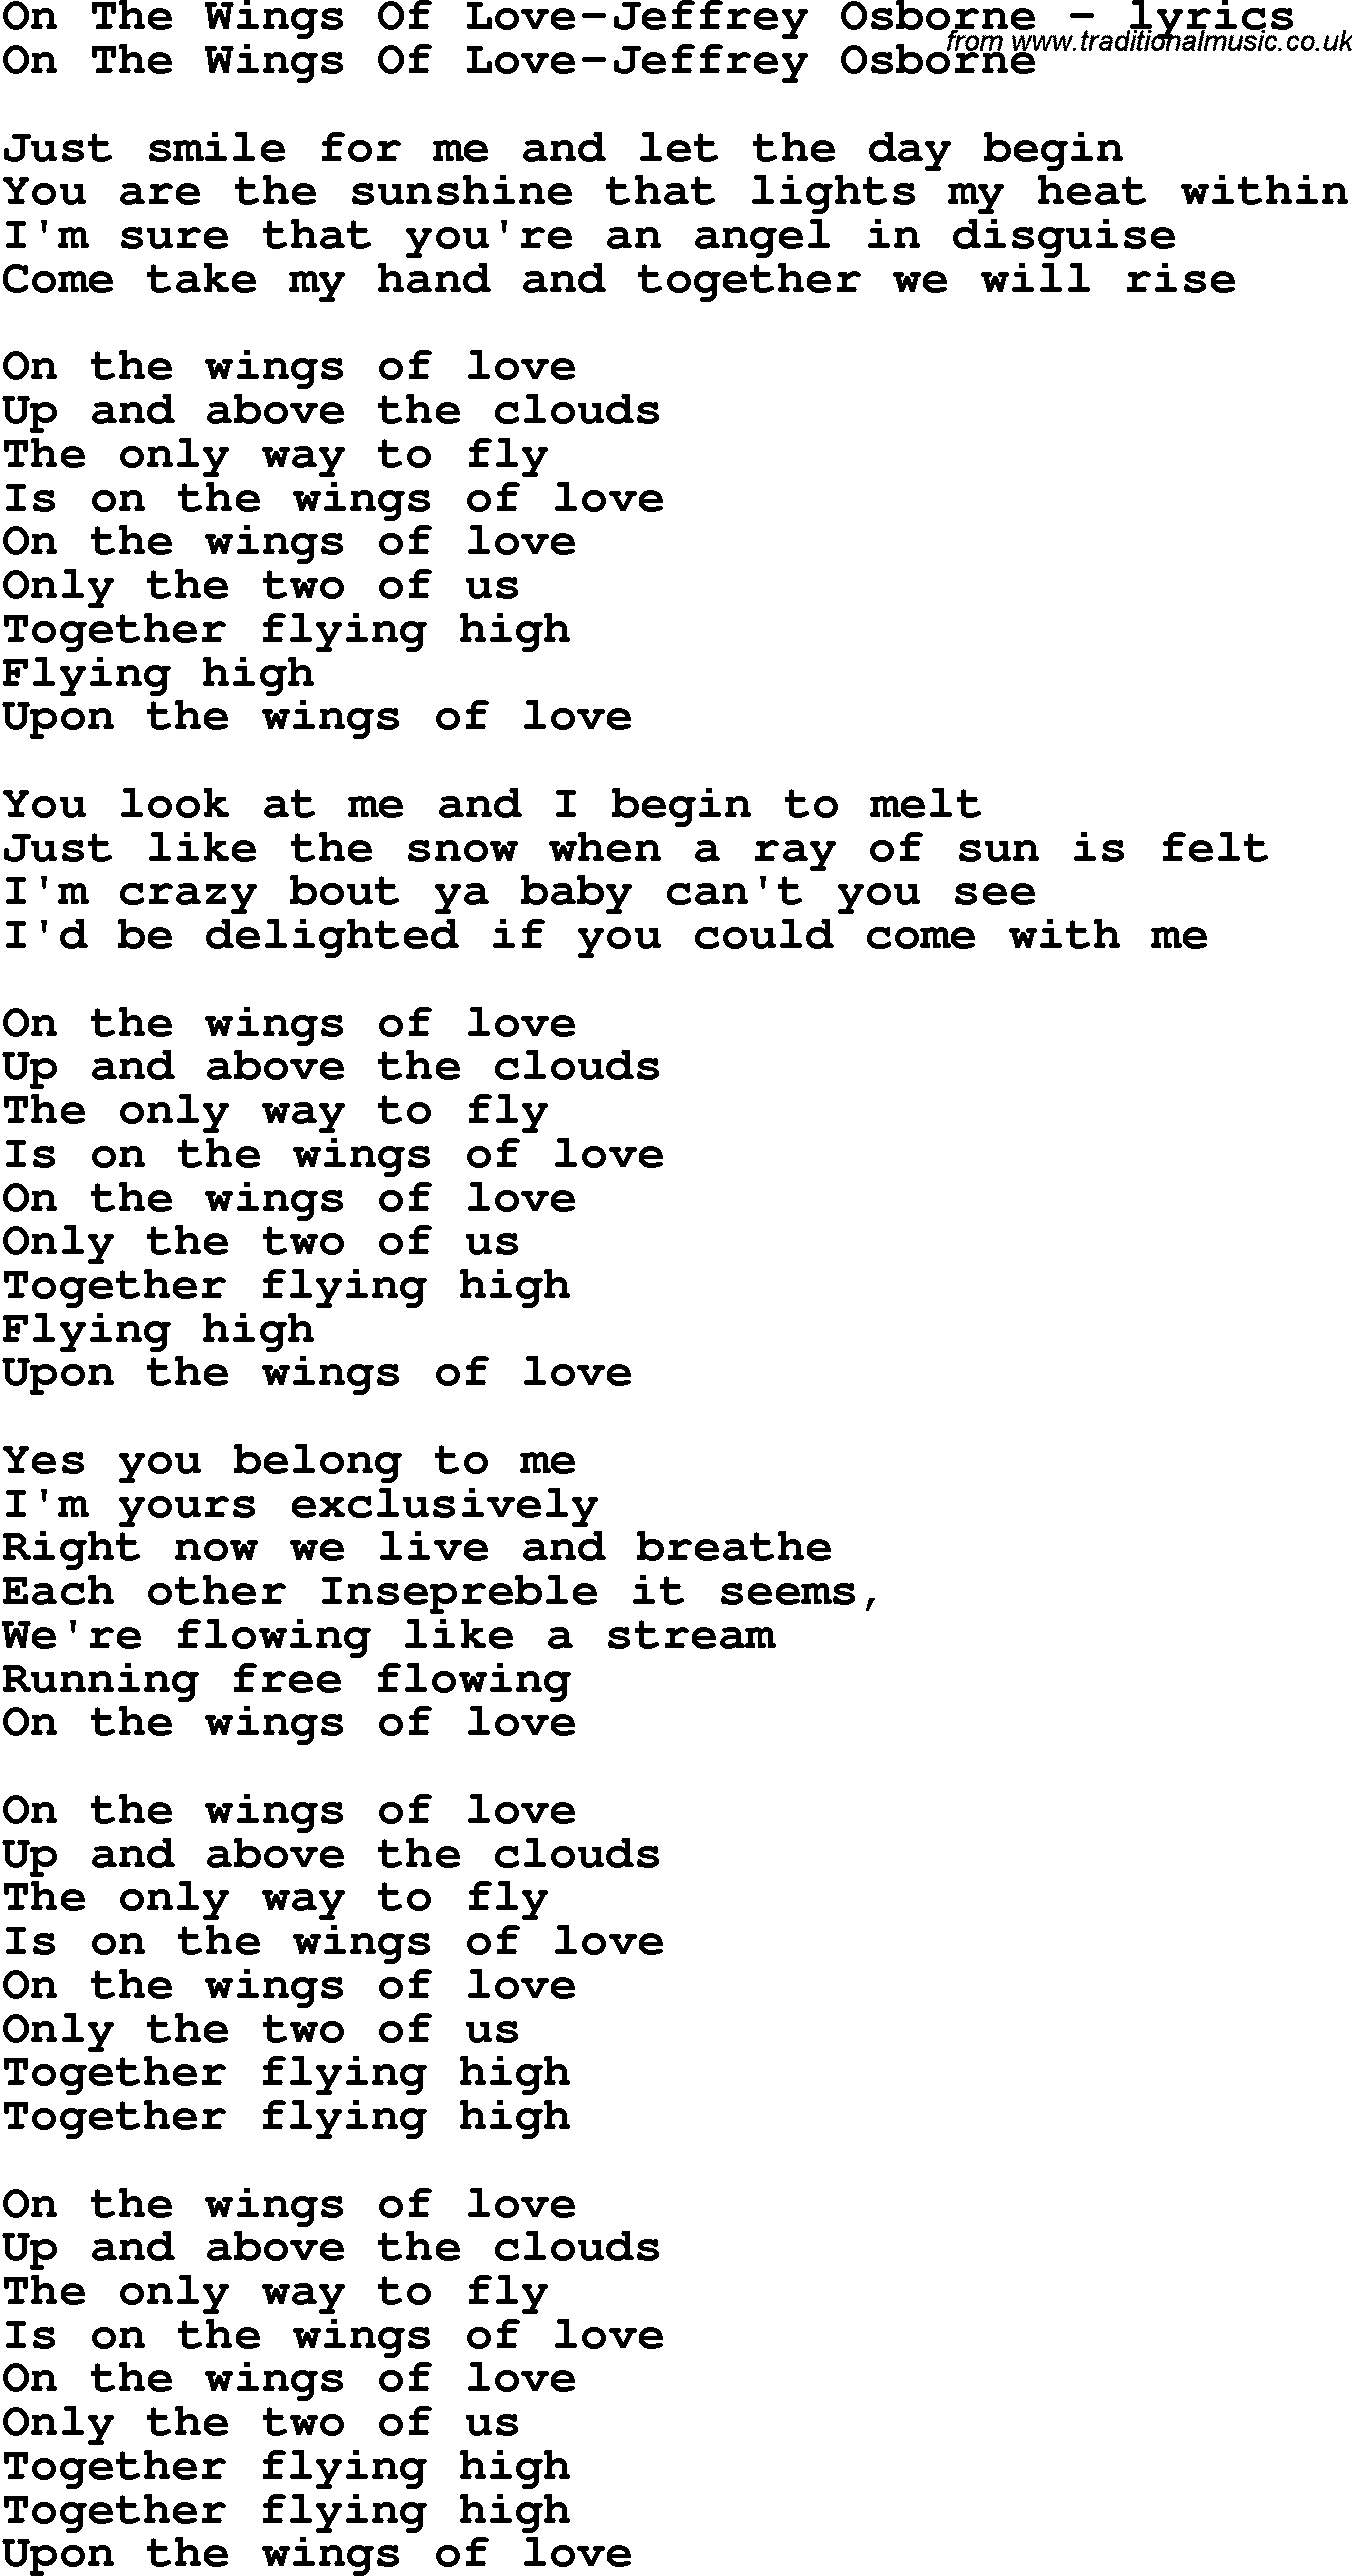 Love Song Lyrics for: On The Wings Of Love-Jeffrey Osborne